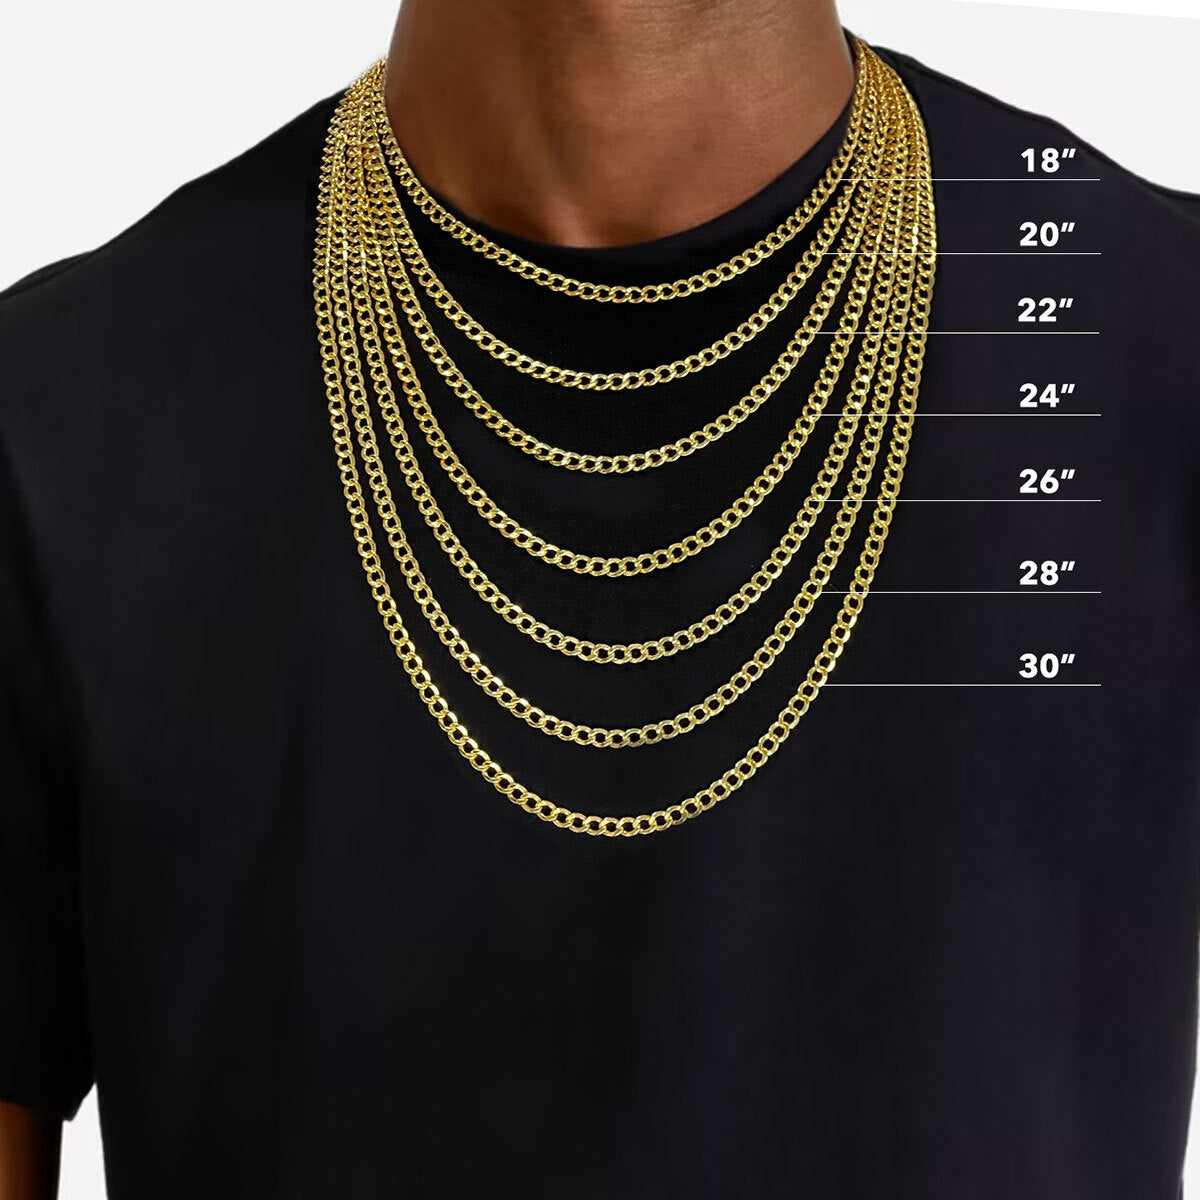 2" CZ Smoking Gorilla Pendant & Chain Necklace Set 10K Yellow Gold